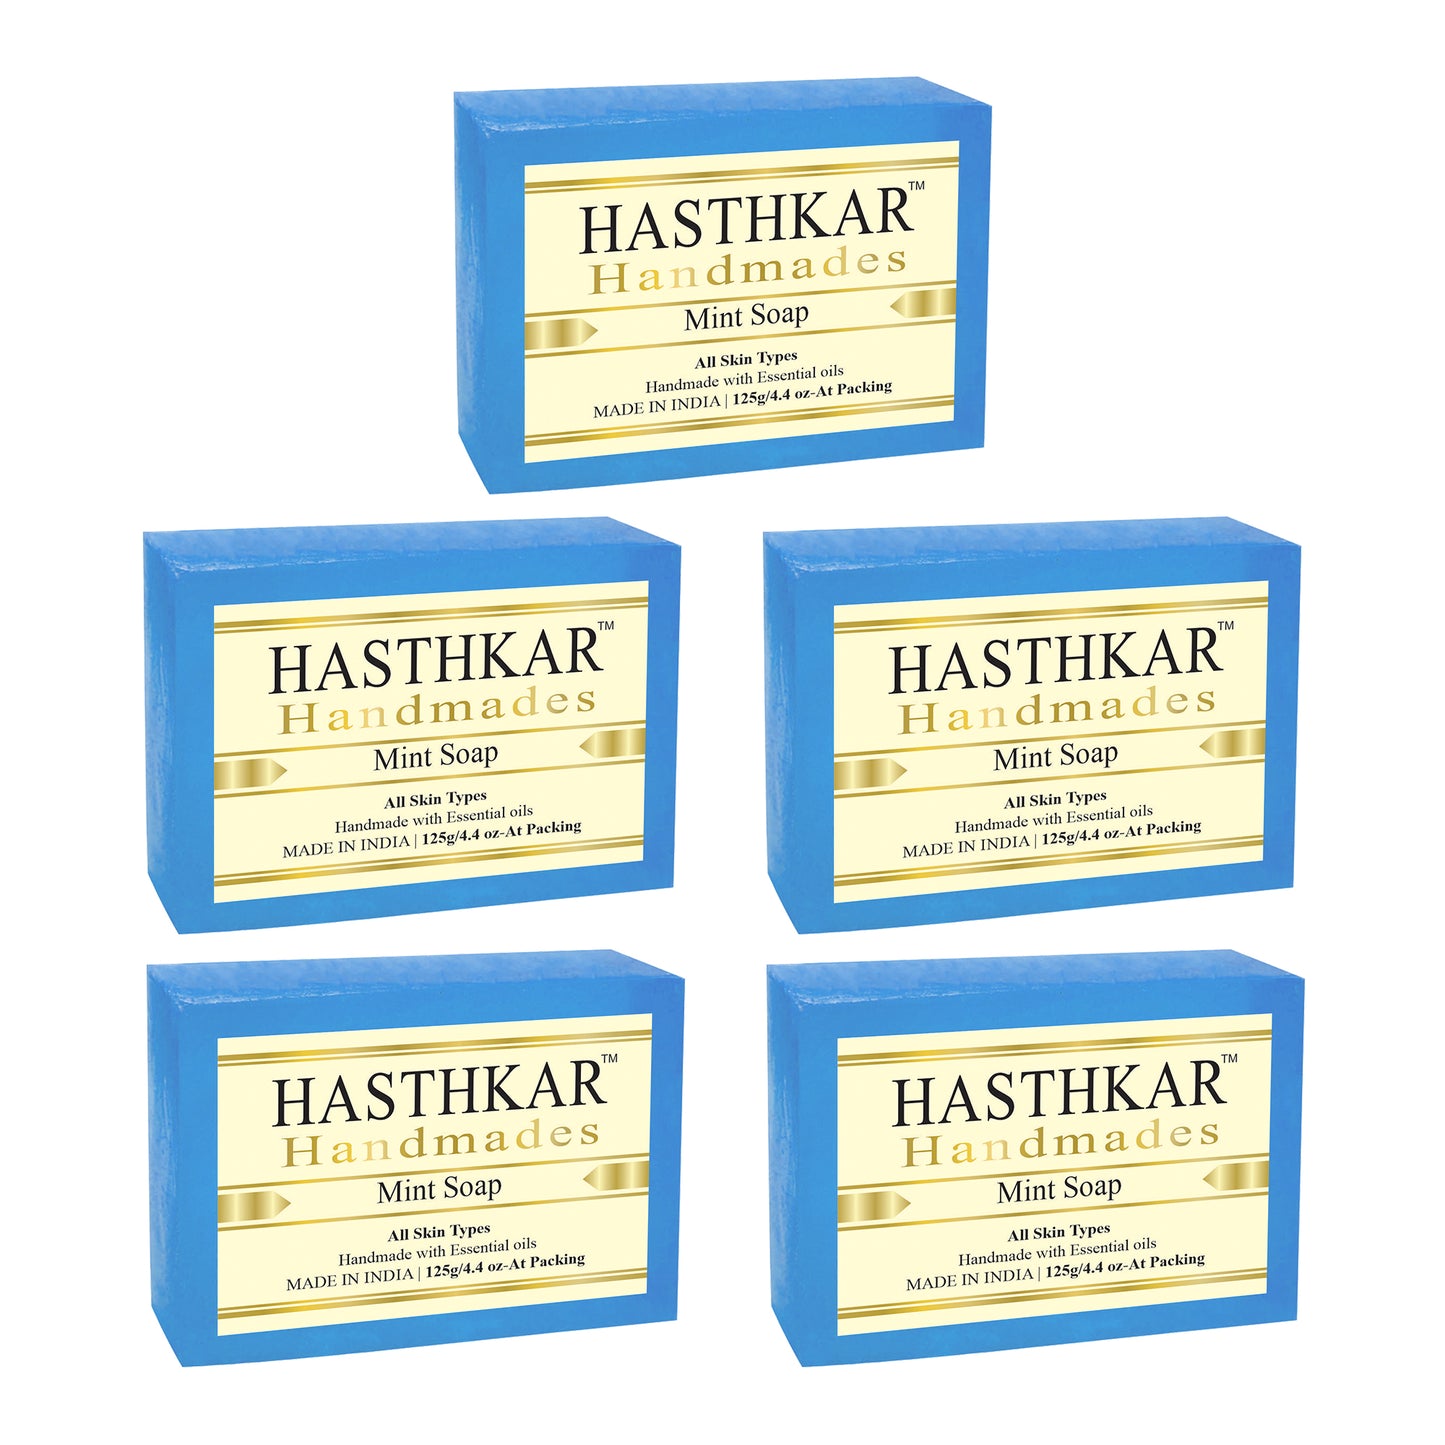 Hasthkar Handmades Glycerine Natural Mint Soap 125Gm